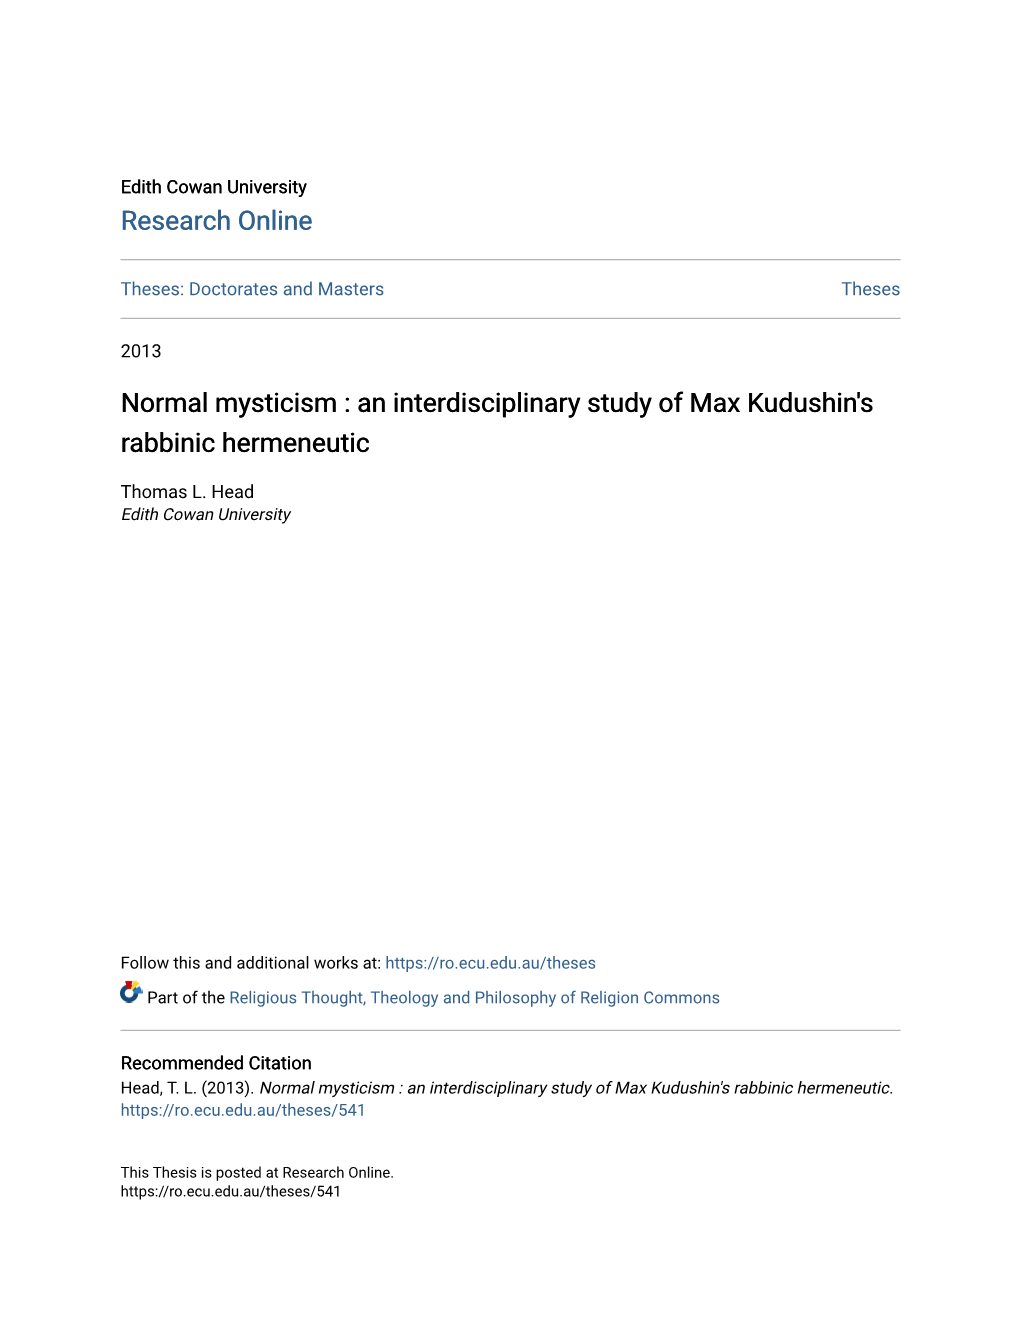 Normal Mysticism : an Interdisciplinary Study of Max Kudushin's Rabbinic Hermeneutic